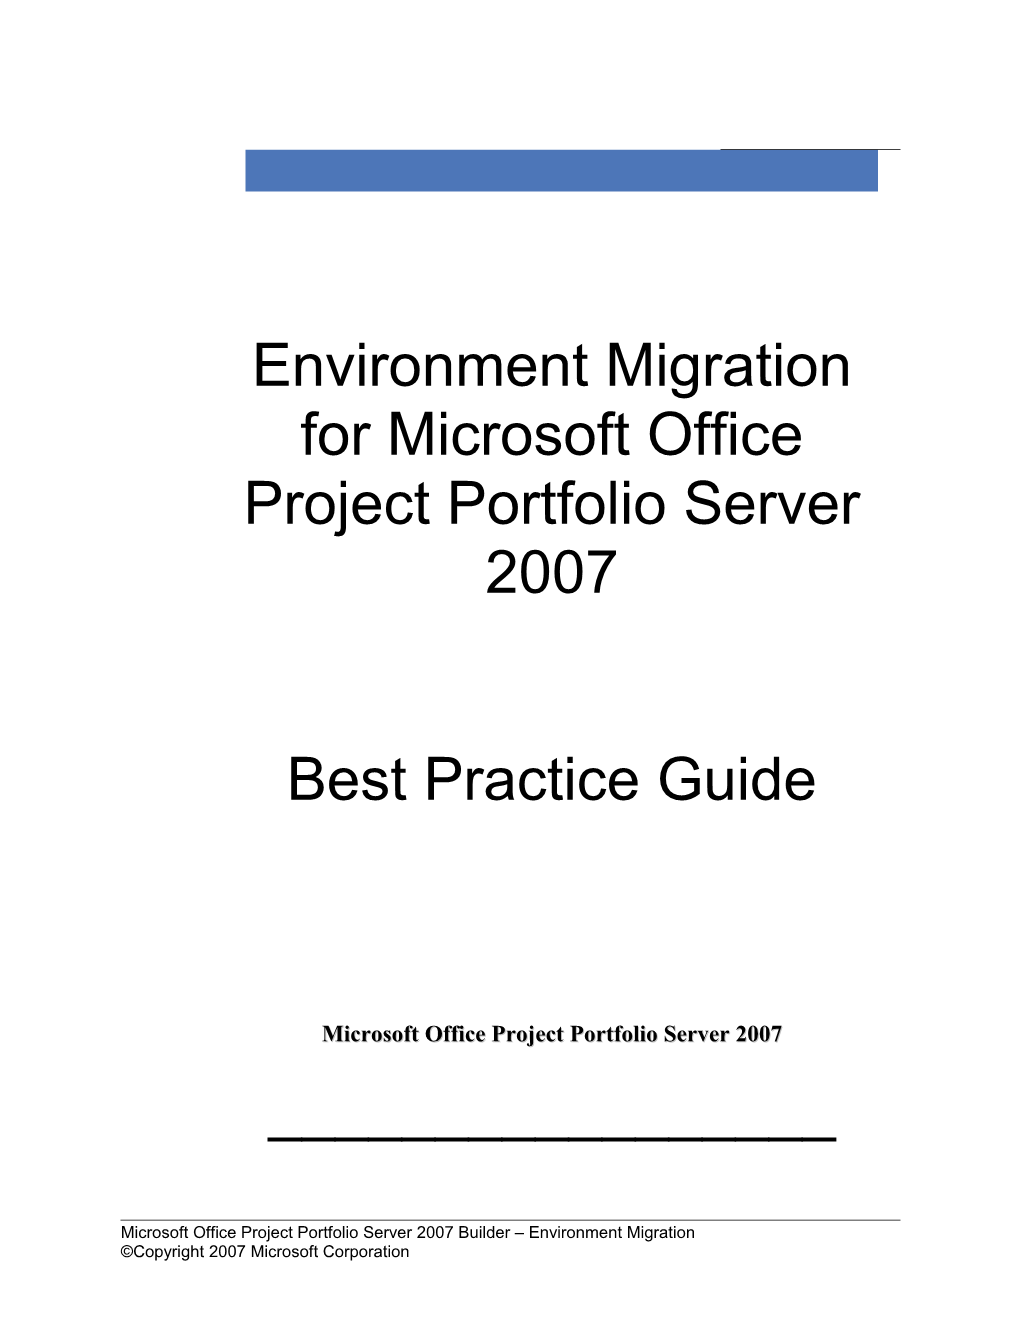 Environment Migration for Microsoft Office Project Portfolio Server 2007